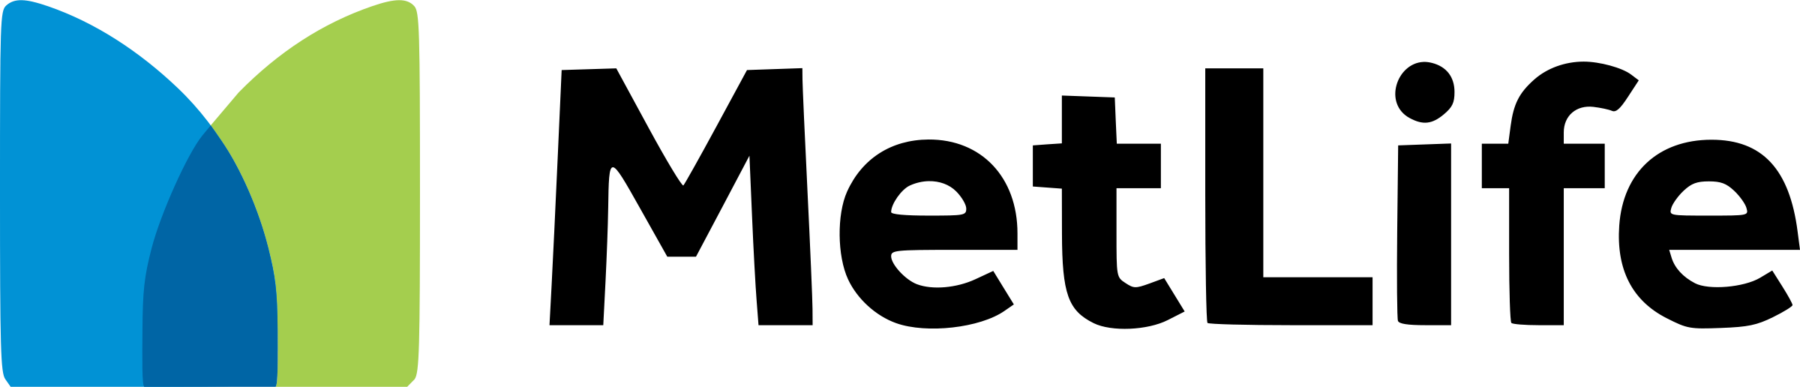 metlife-1-logo-png-transparent